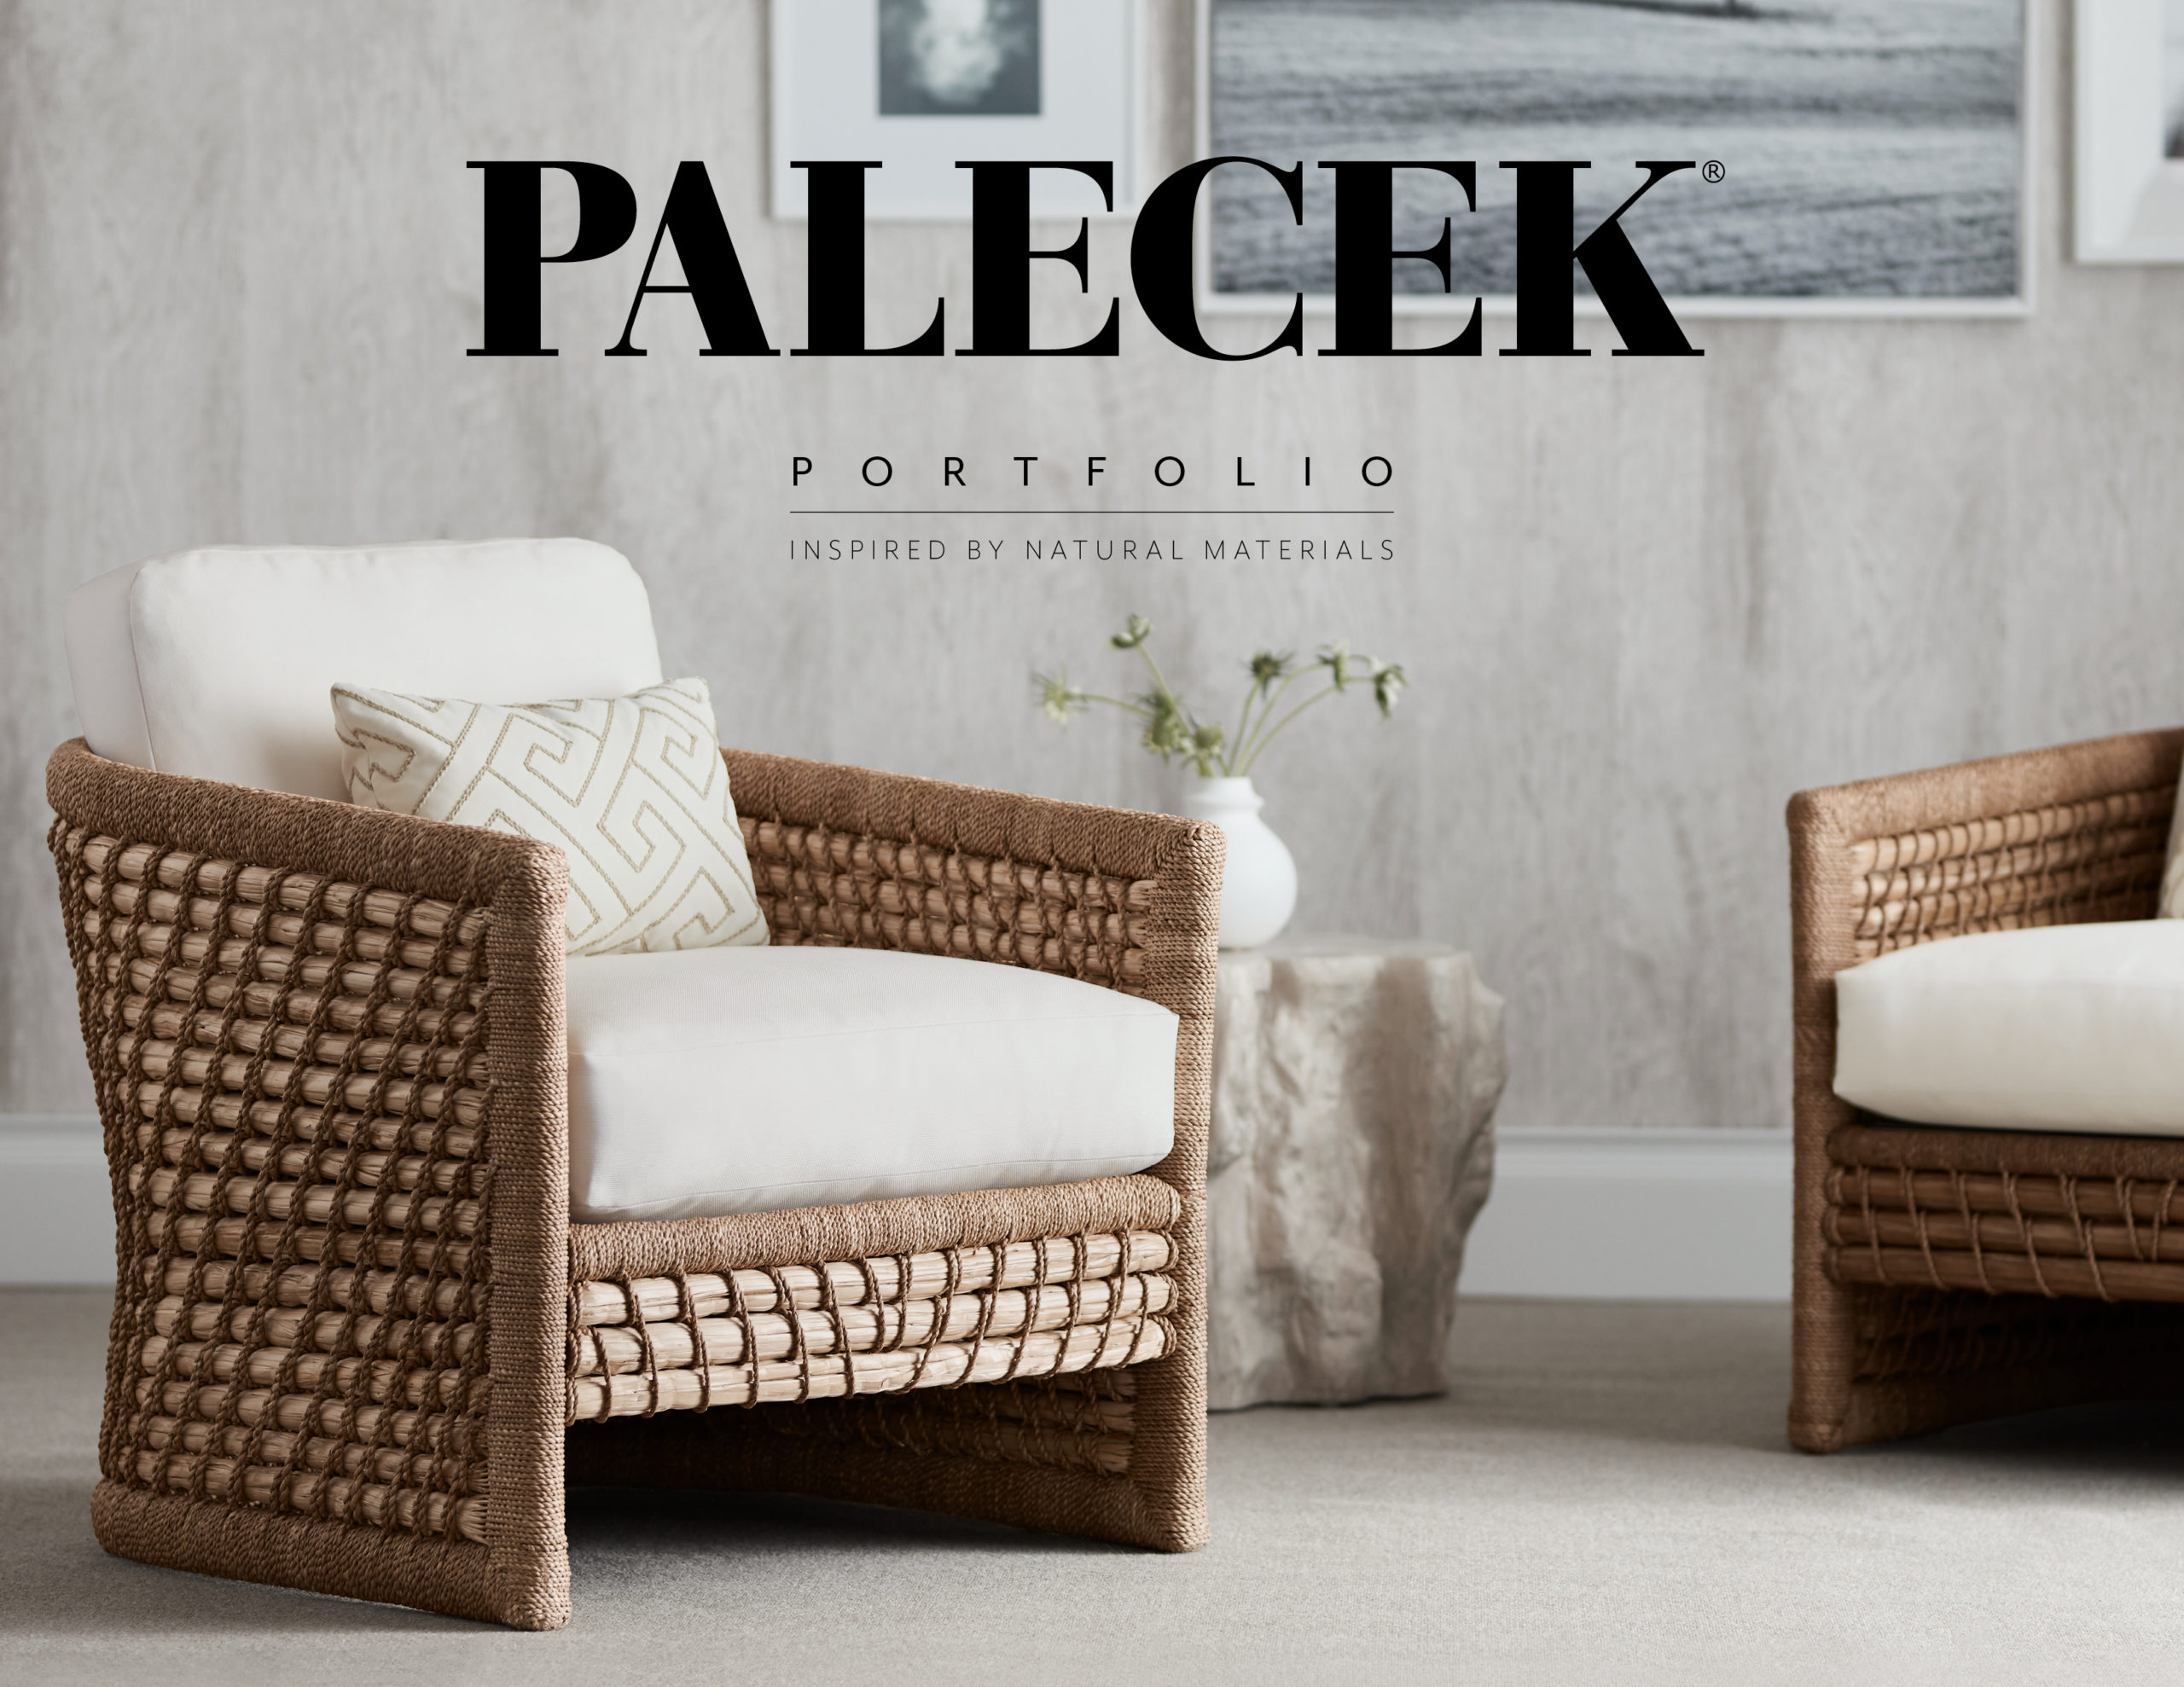 Introducing PALECEK’s Portfolio - News from Laguna Design Center